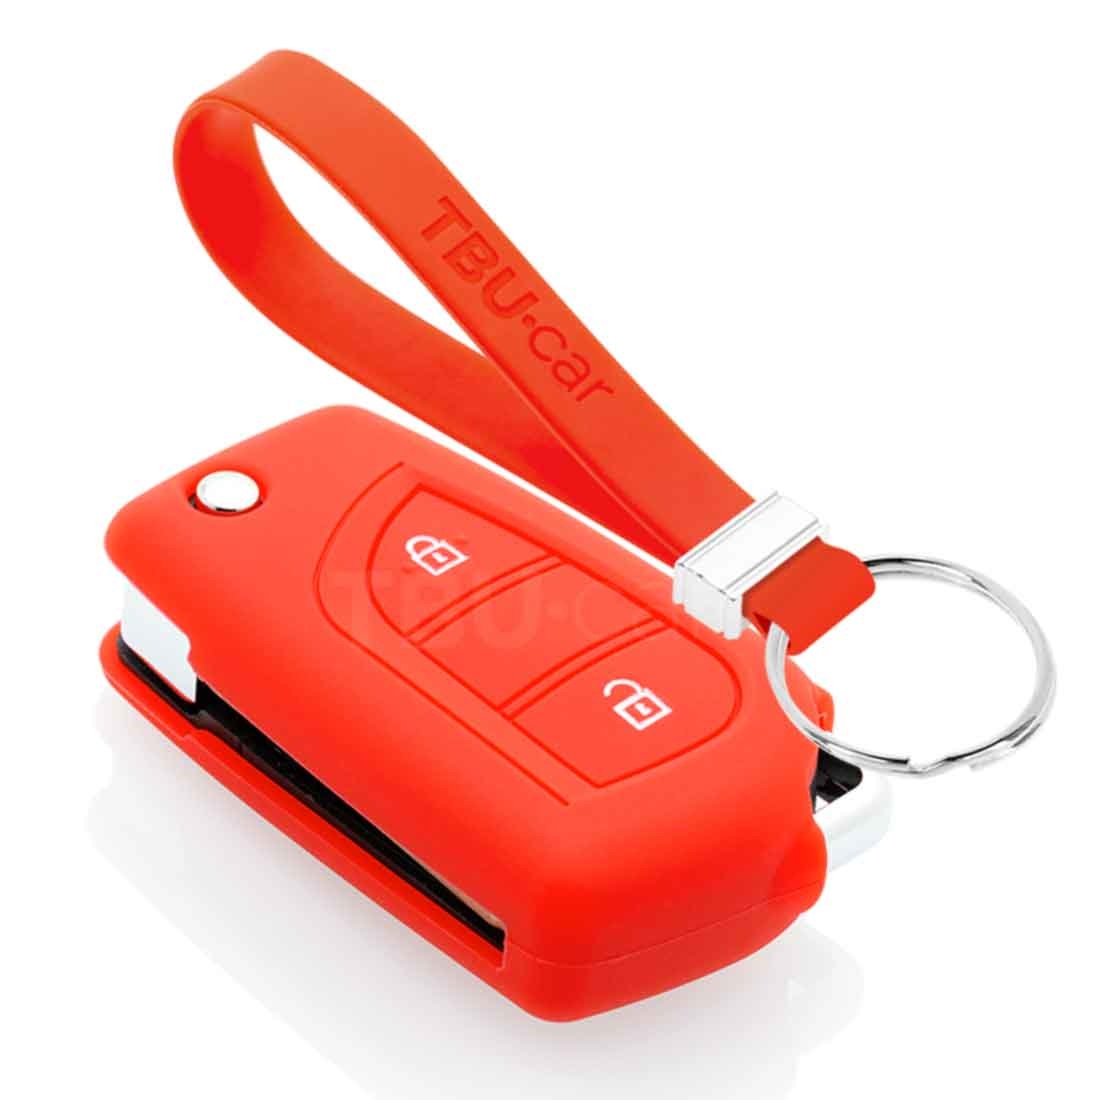 TBU car TBU car Autoschlüssel Hülle kompatibel mit Toyota 2 Tasten - Schutzhülle aus Silikon - Auto Schlüsselhülle Cover in Rot